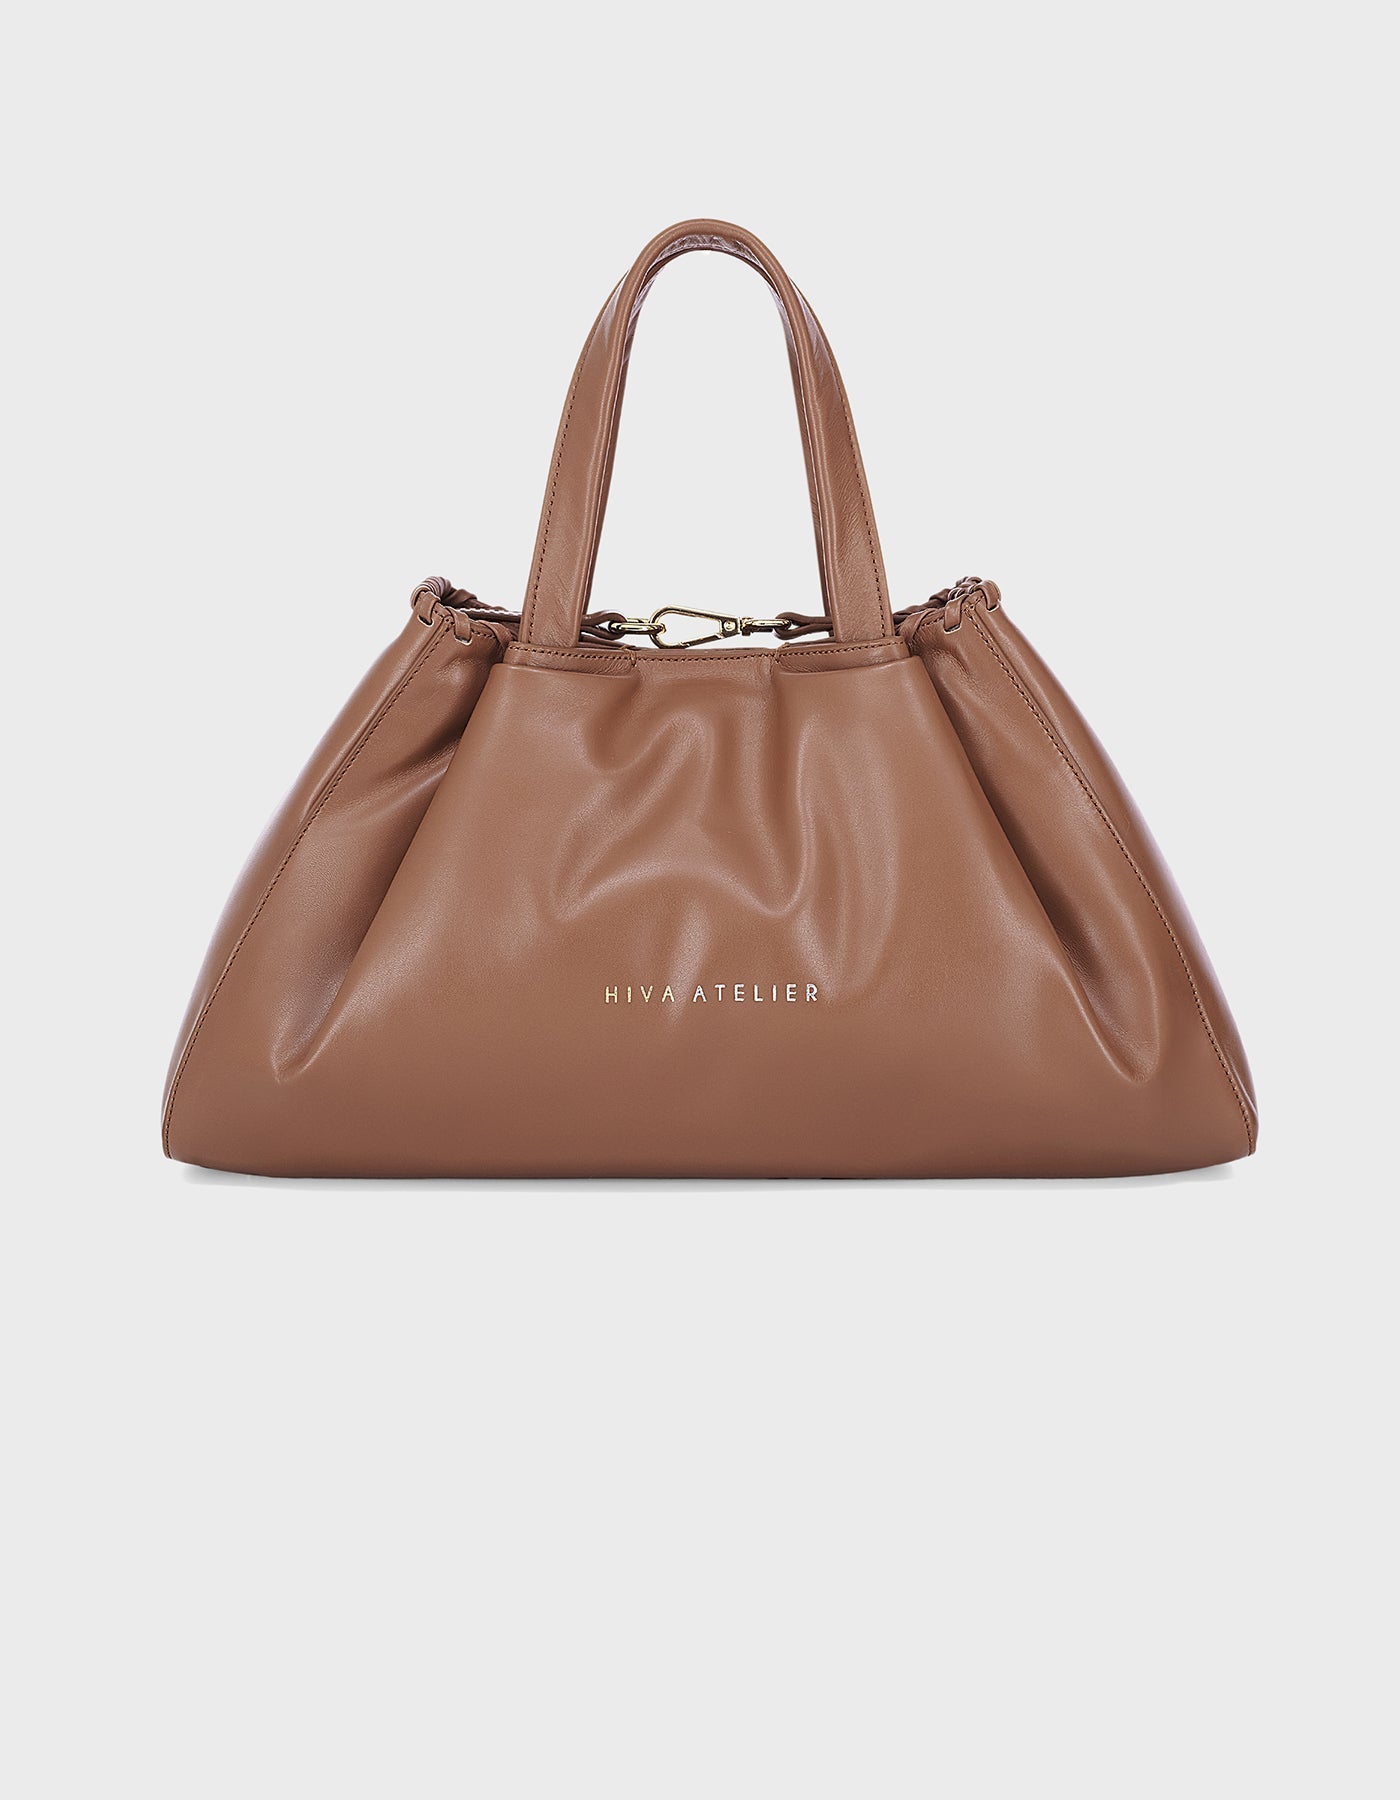 Hiva Atelier | Nubi Pedded Shoulder Bag Wood | Beautiful and Versatile Leather Accessories